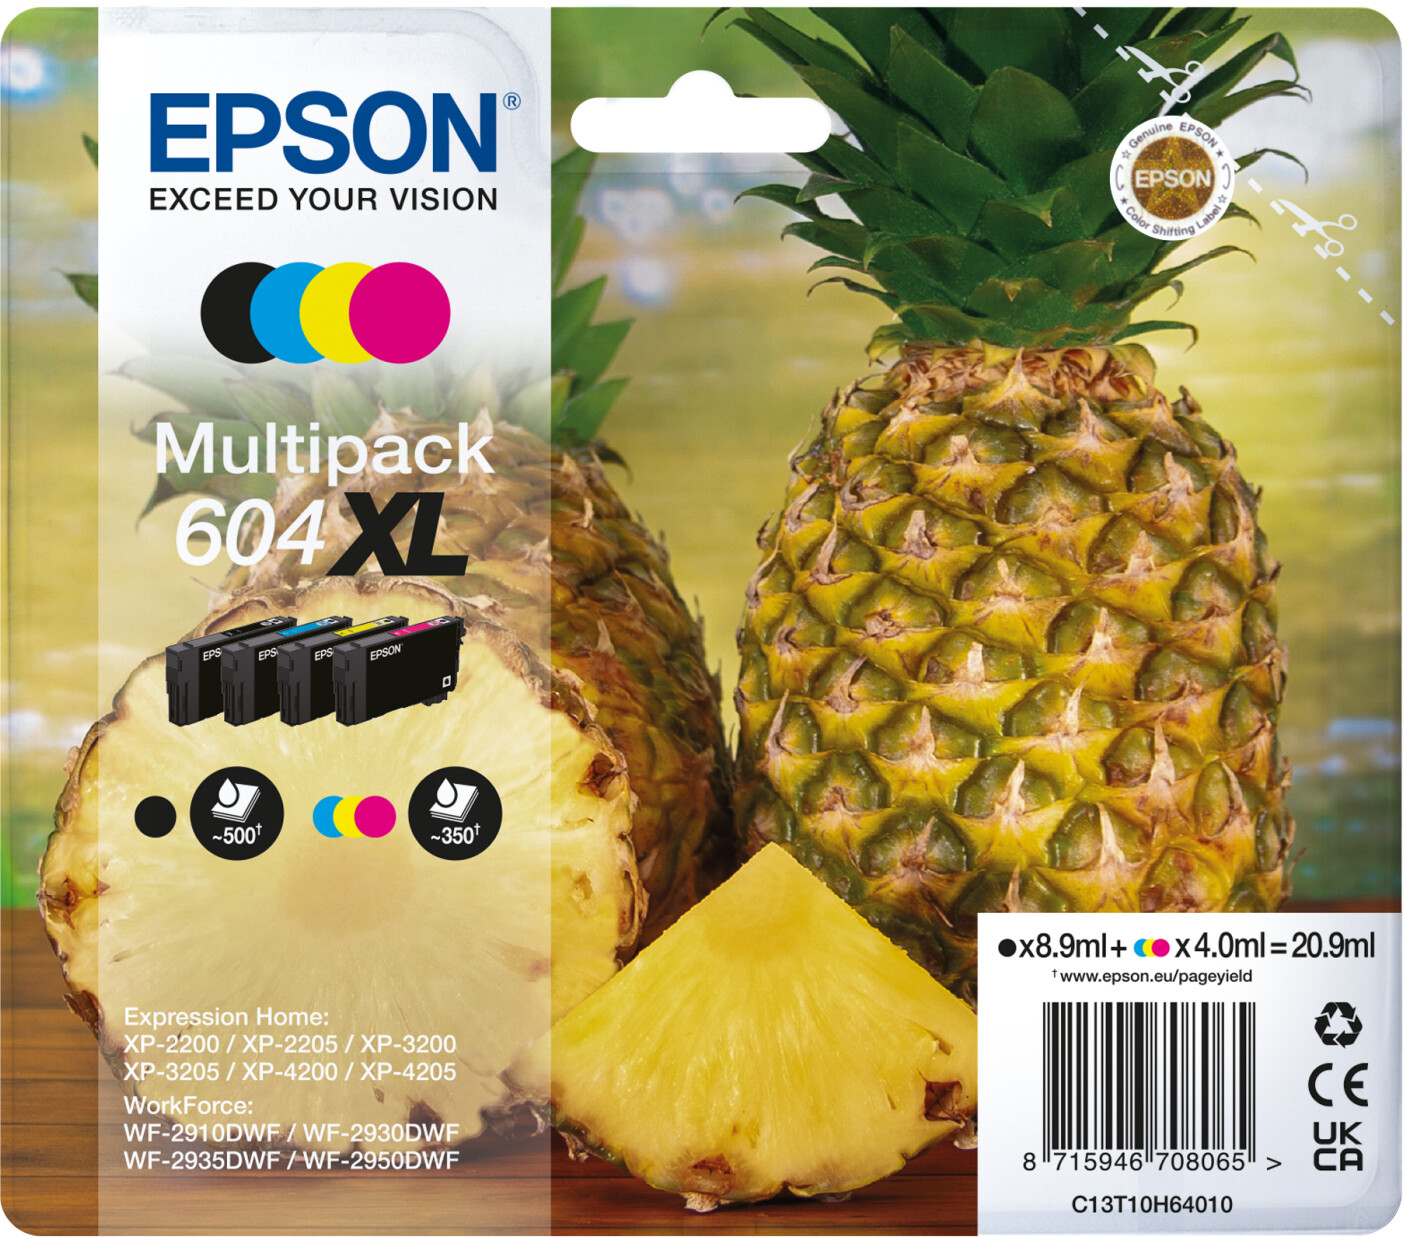 Epson Ananas 604XL Multipack